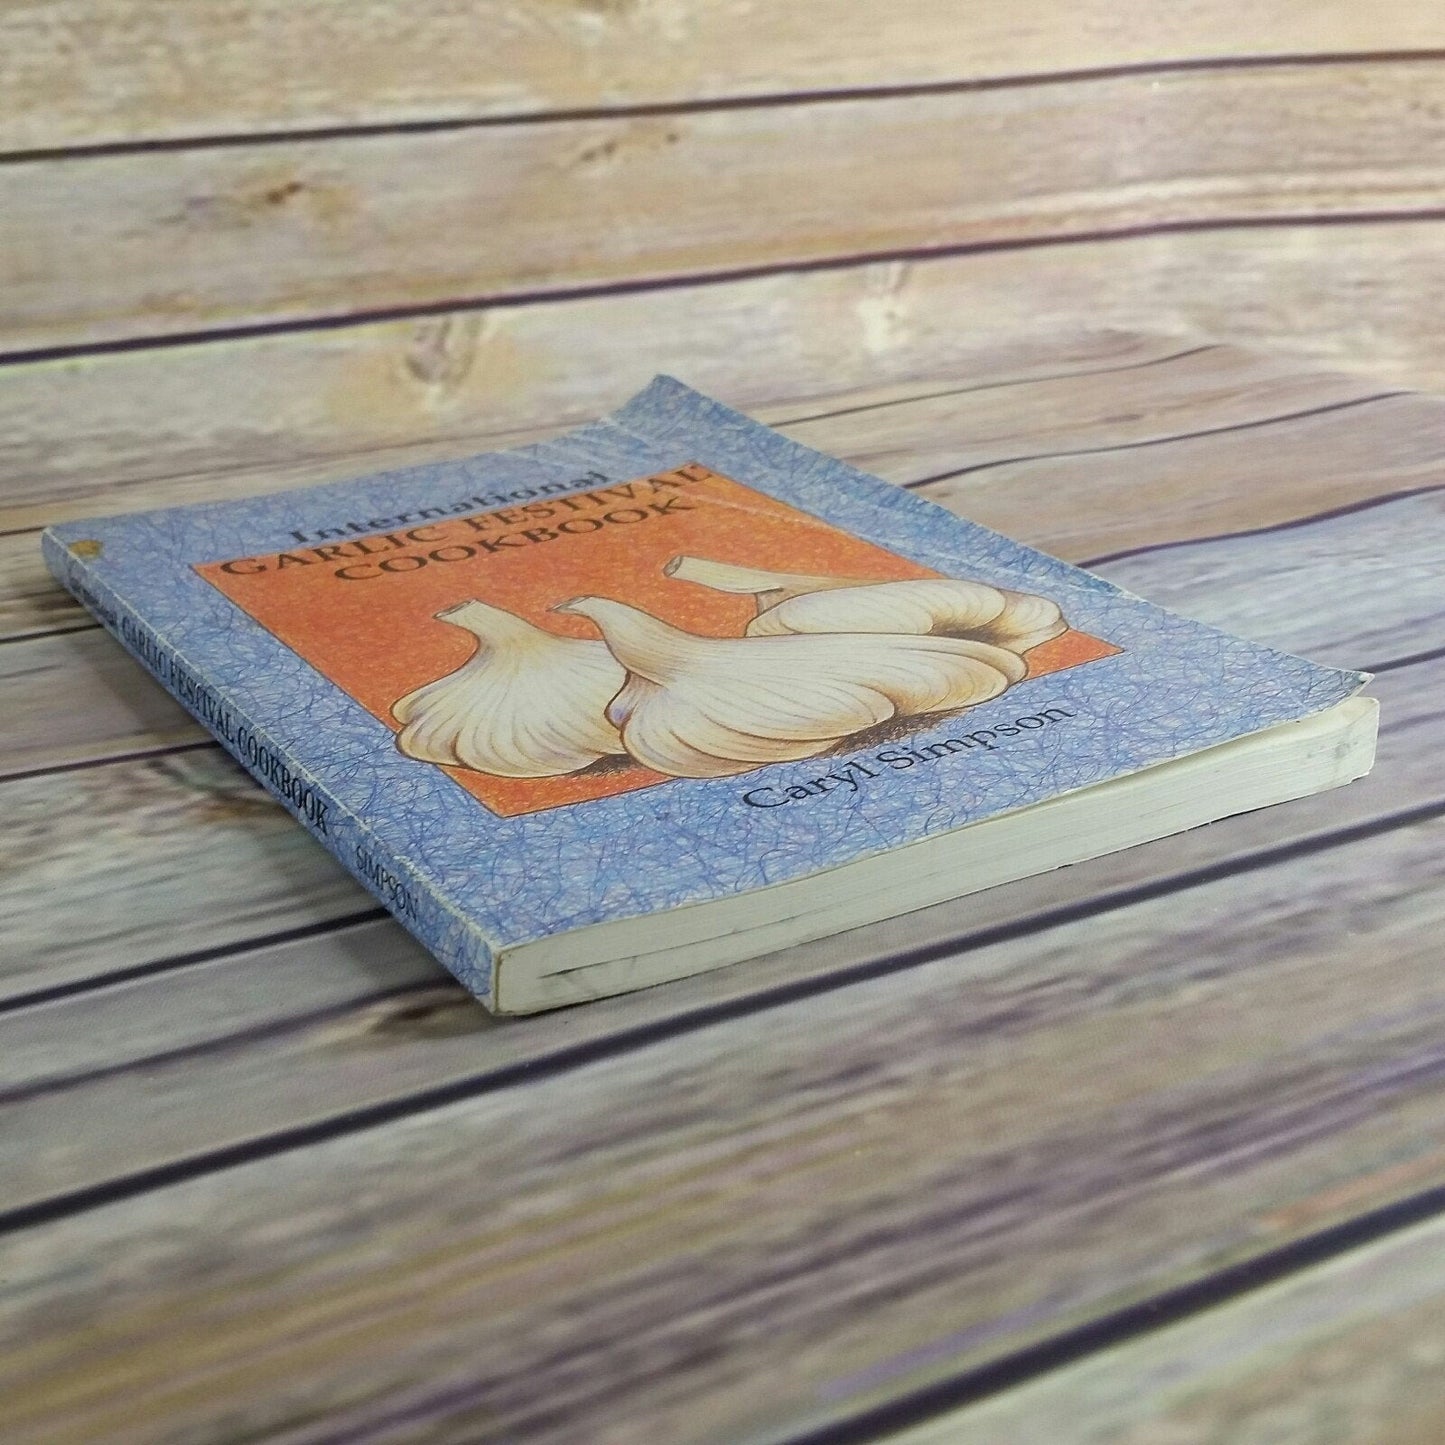 Vintage California Cookbook Gilroy International Garlic Festival 1994 Paperback Caryl Simpson